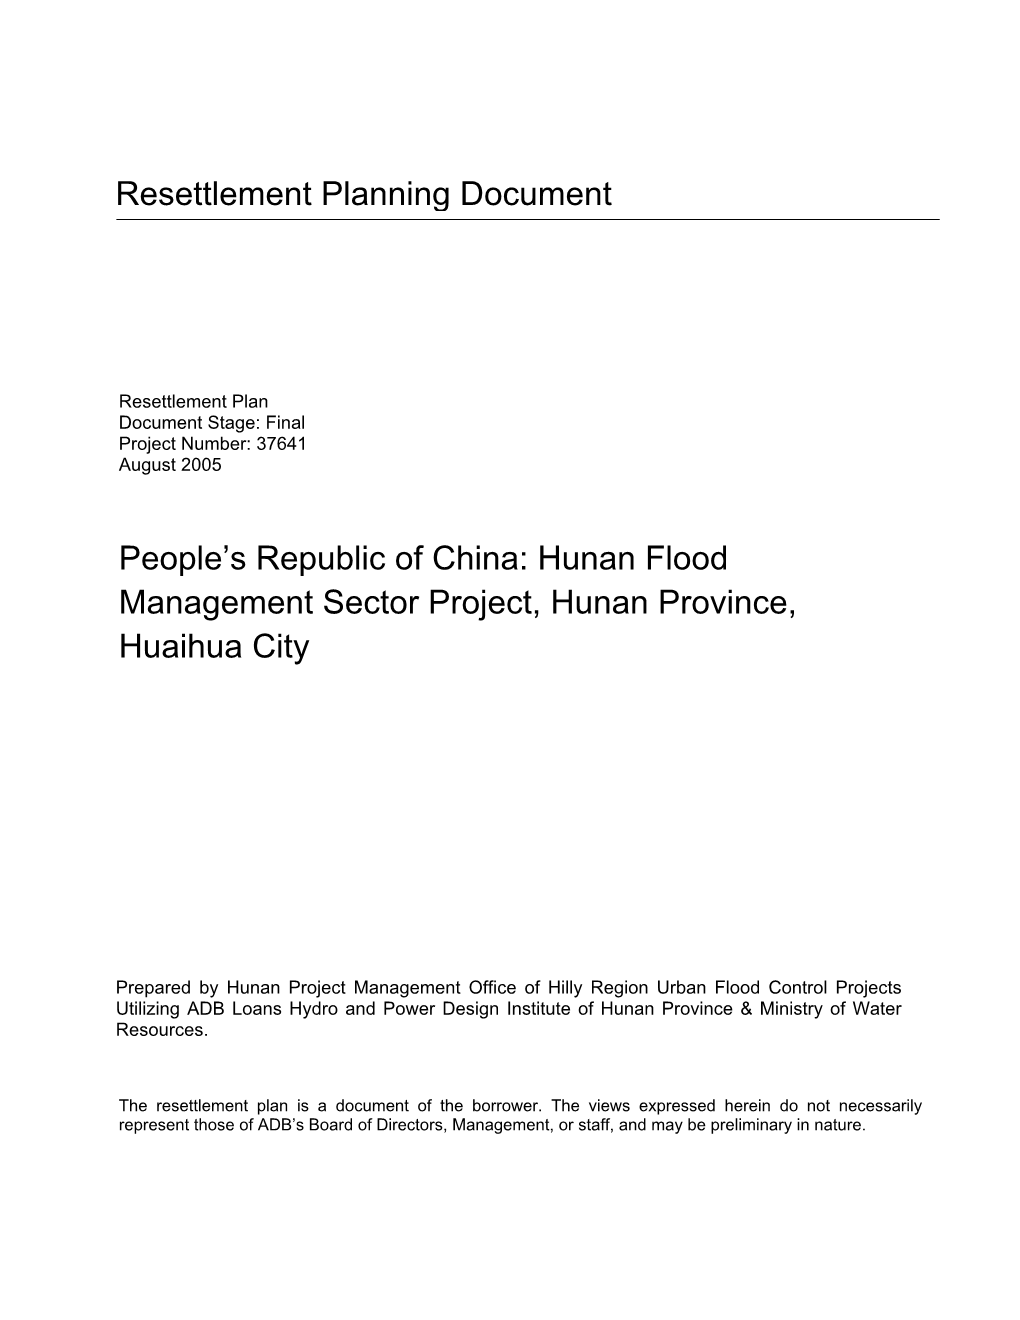 Hunan Flood Management Sector Project, Hunan Province, Huaihua City